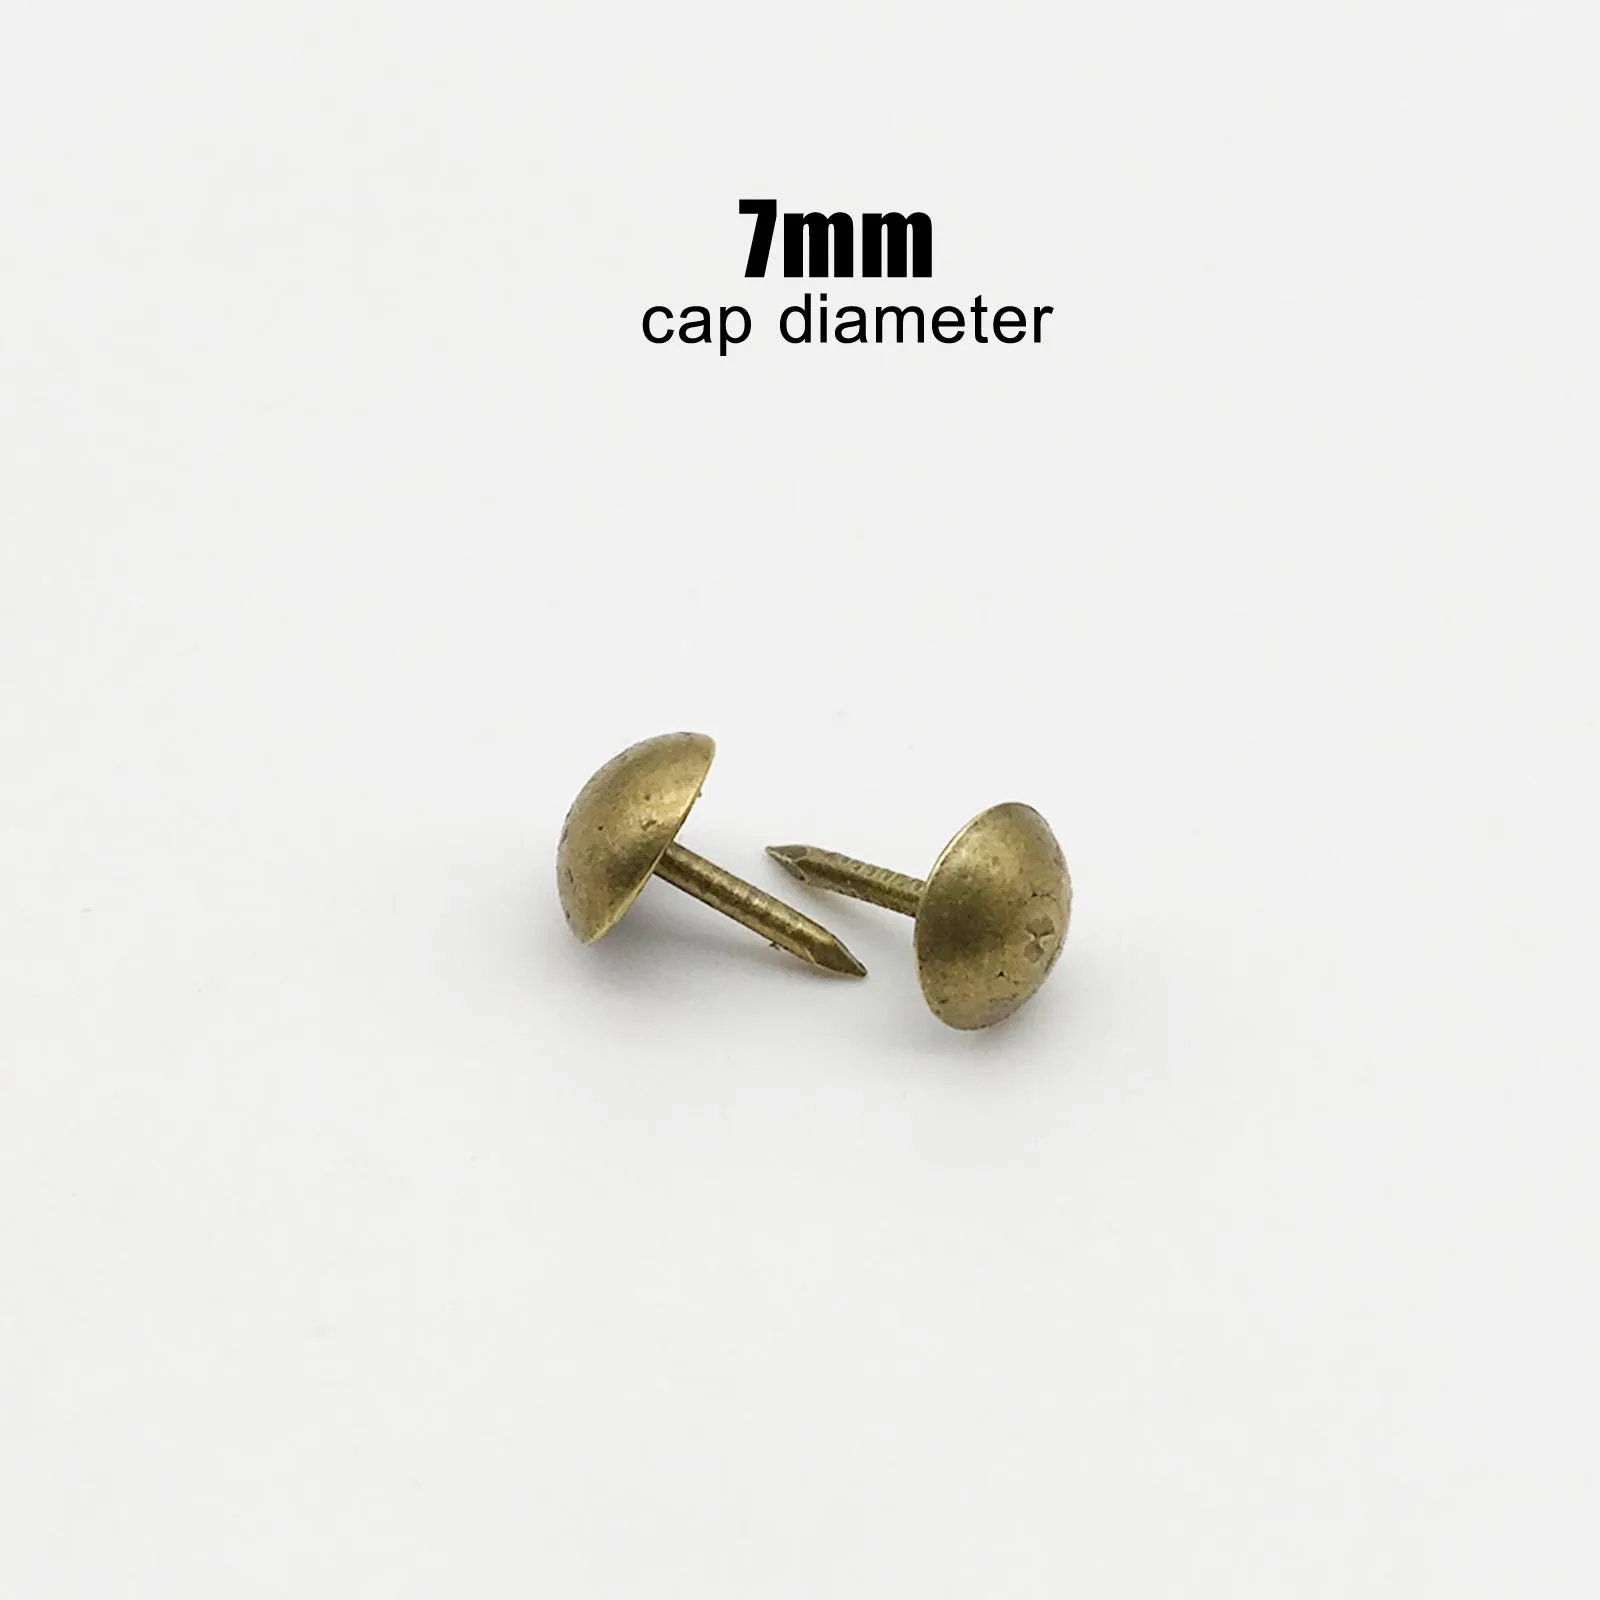 cap diameter 7mm